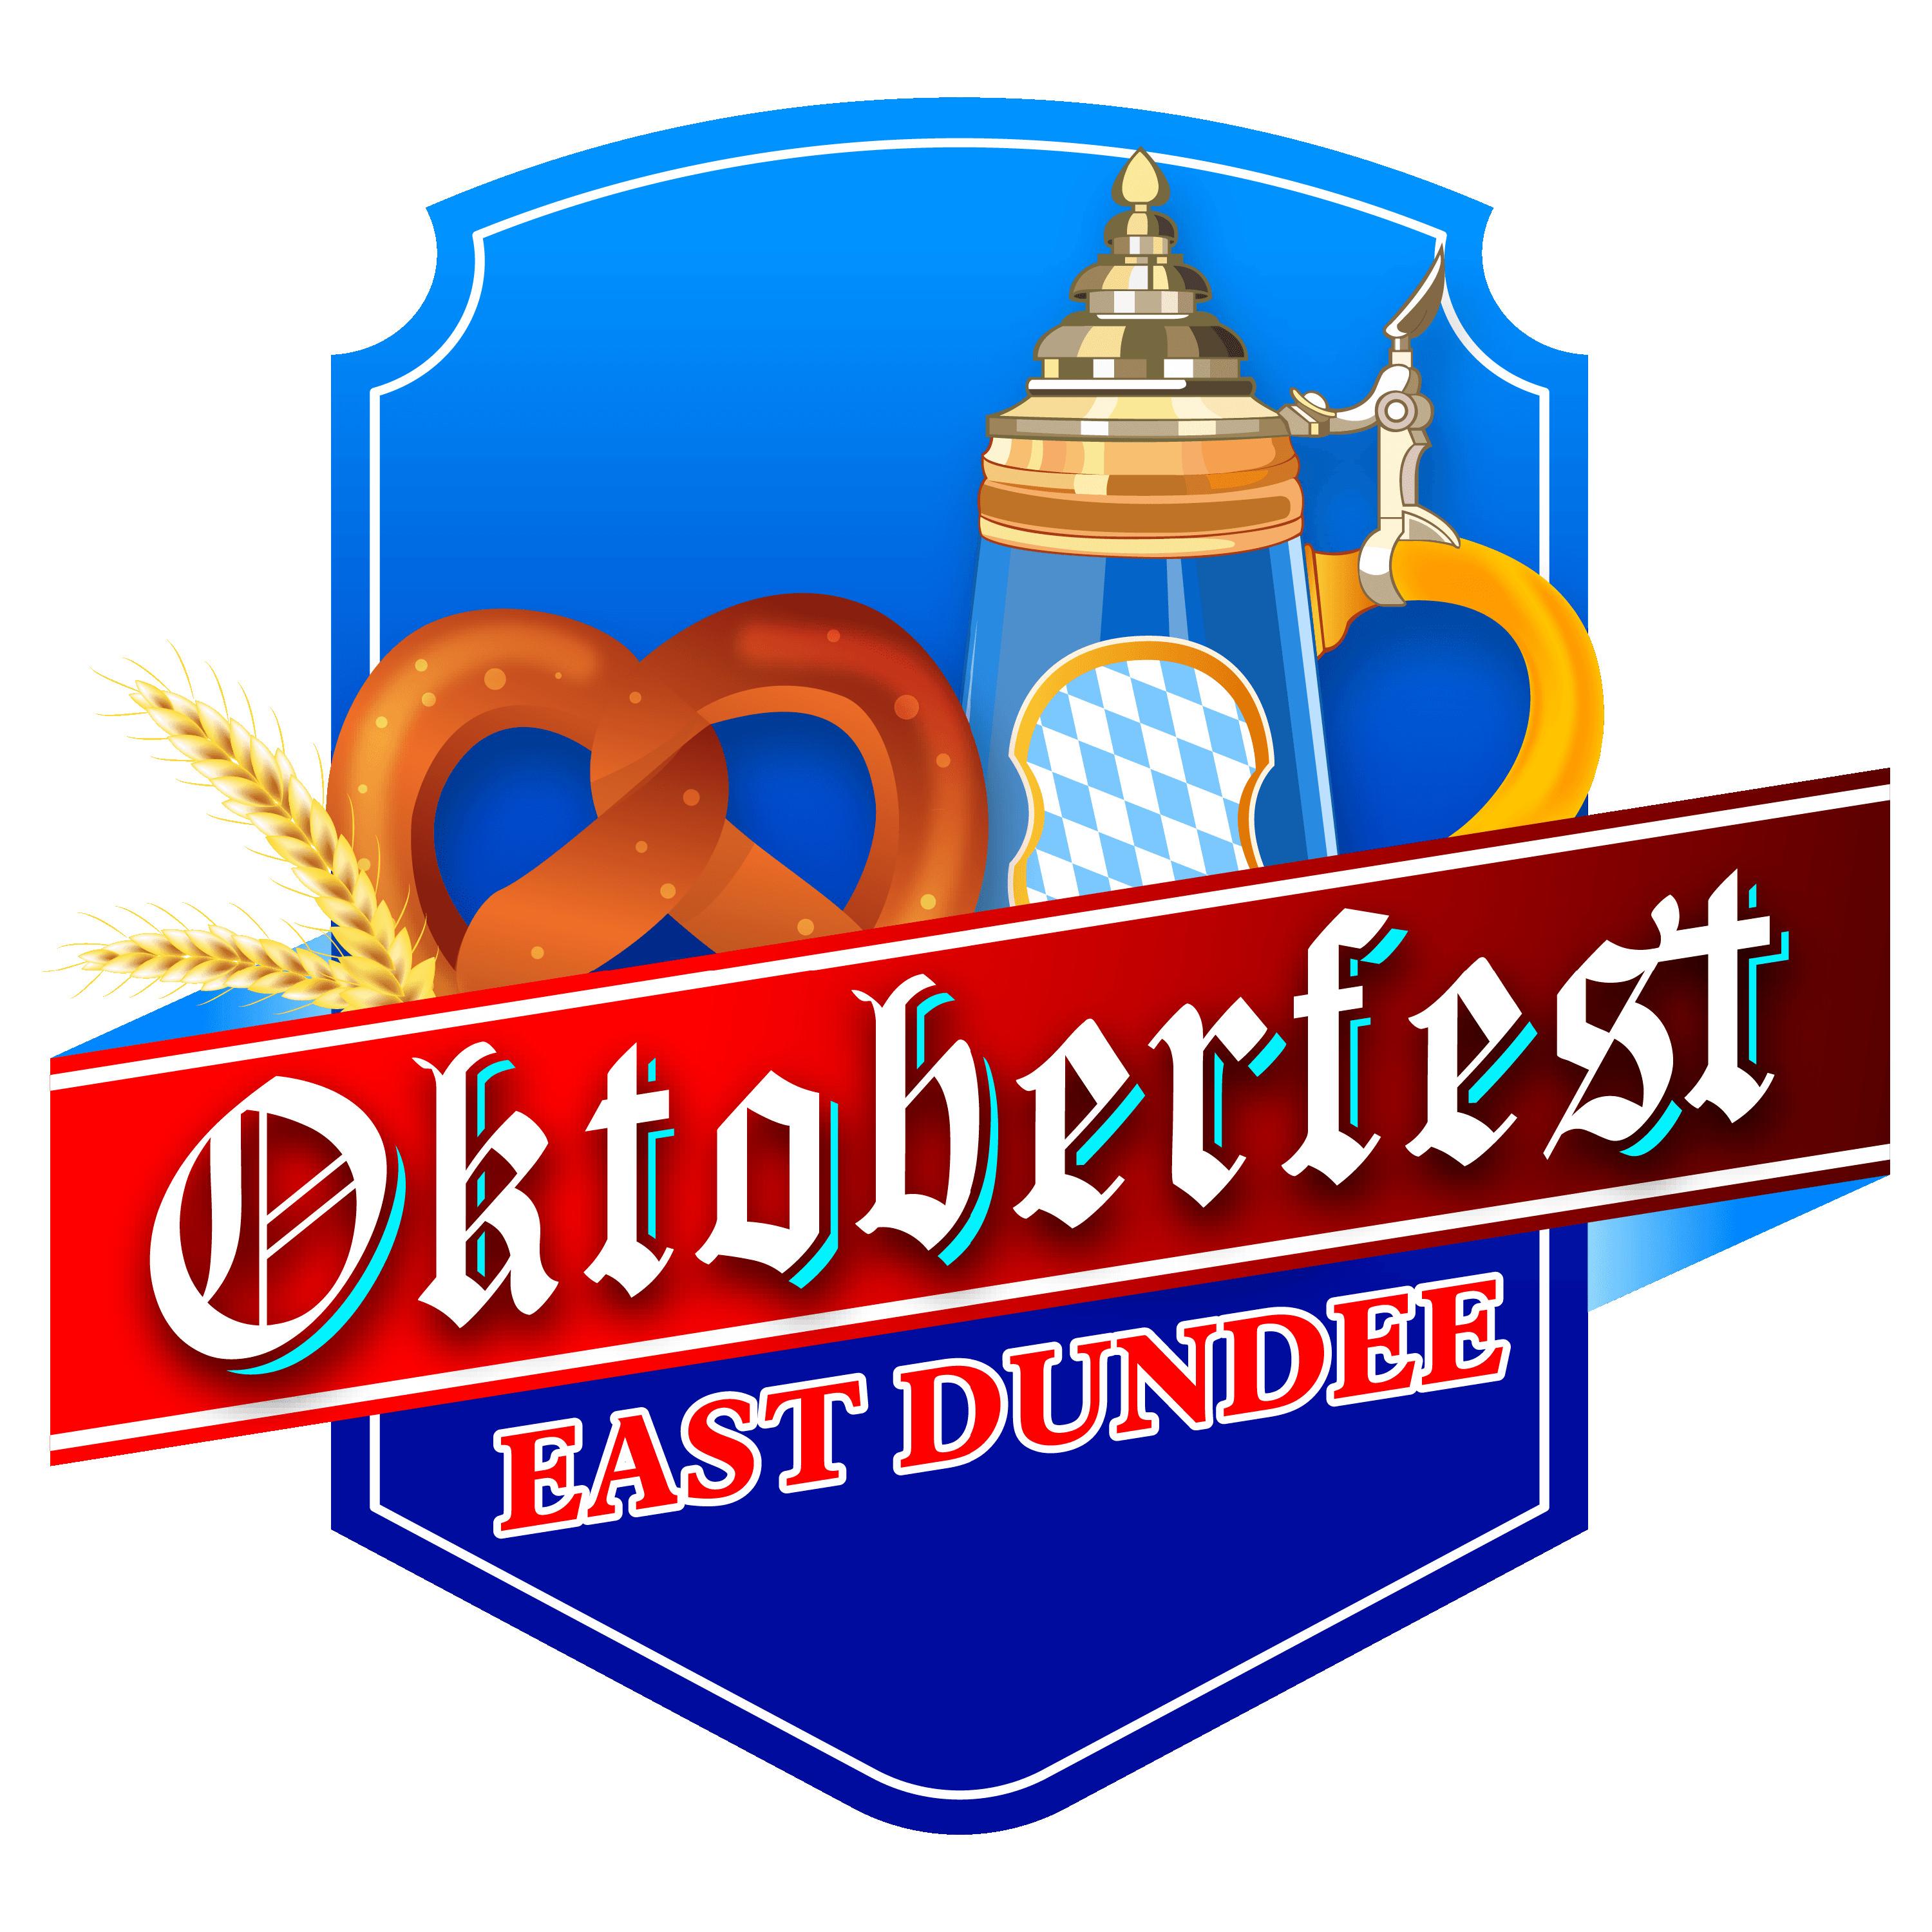 East Dundee Oktoberfest Logo